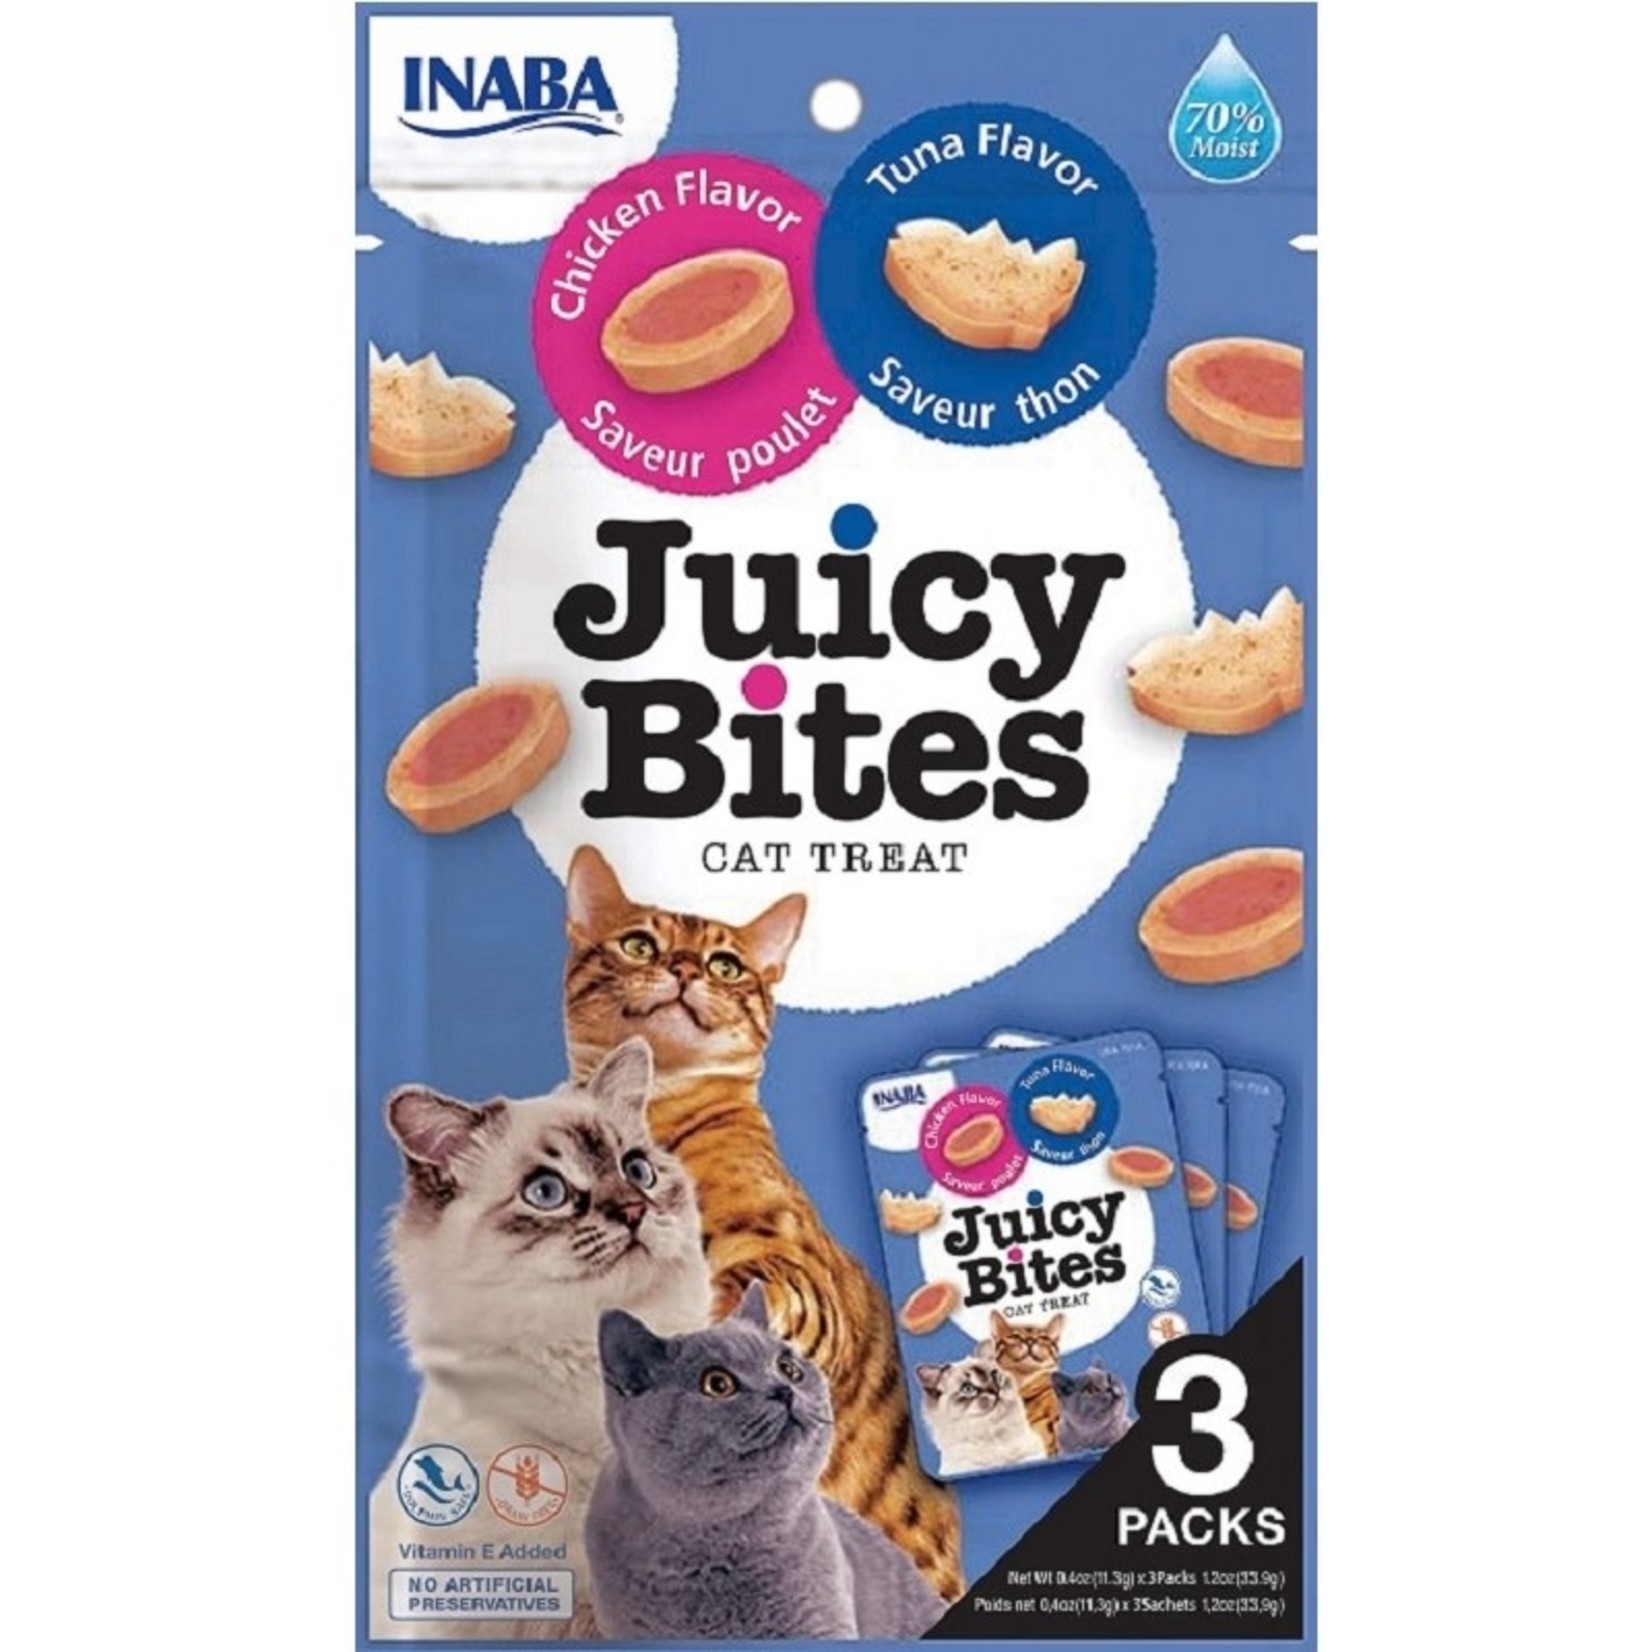 INA Juicy Bites Tuna/Ckn 3 pk 4 oz